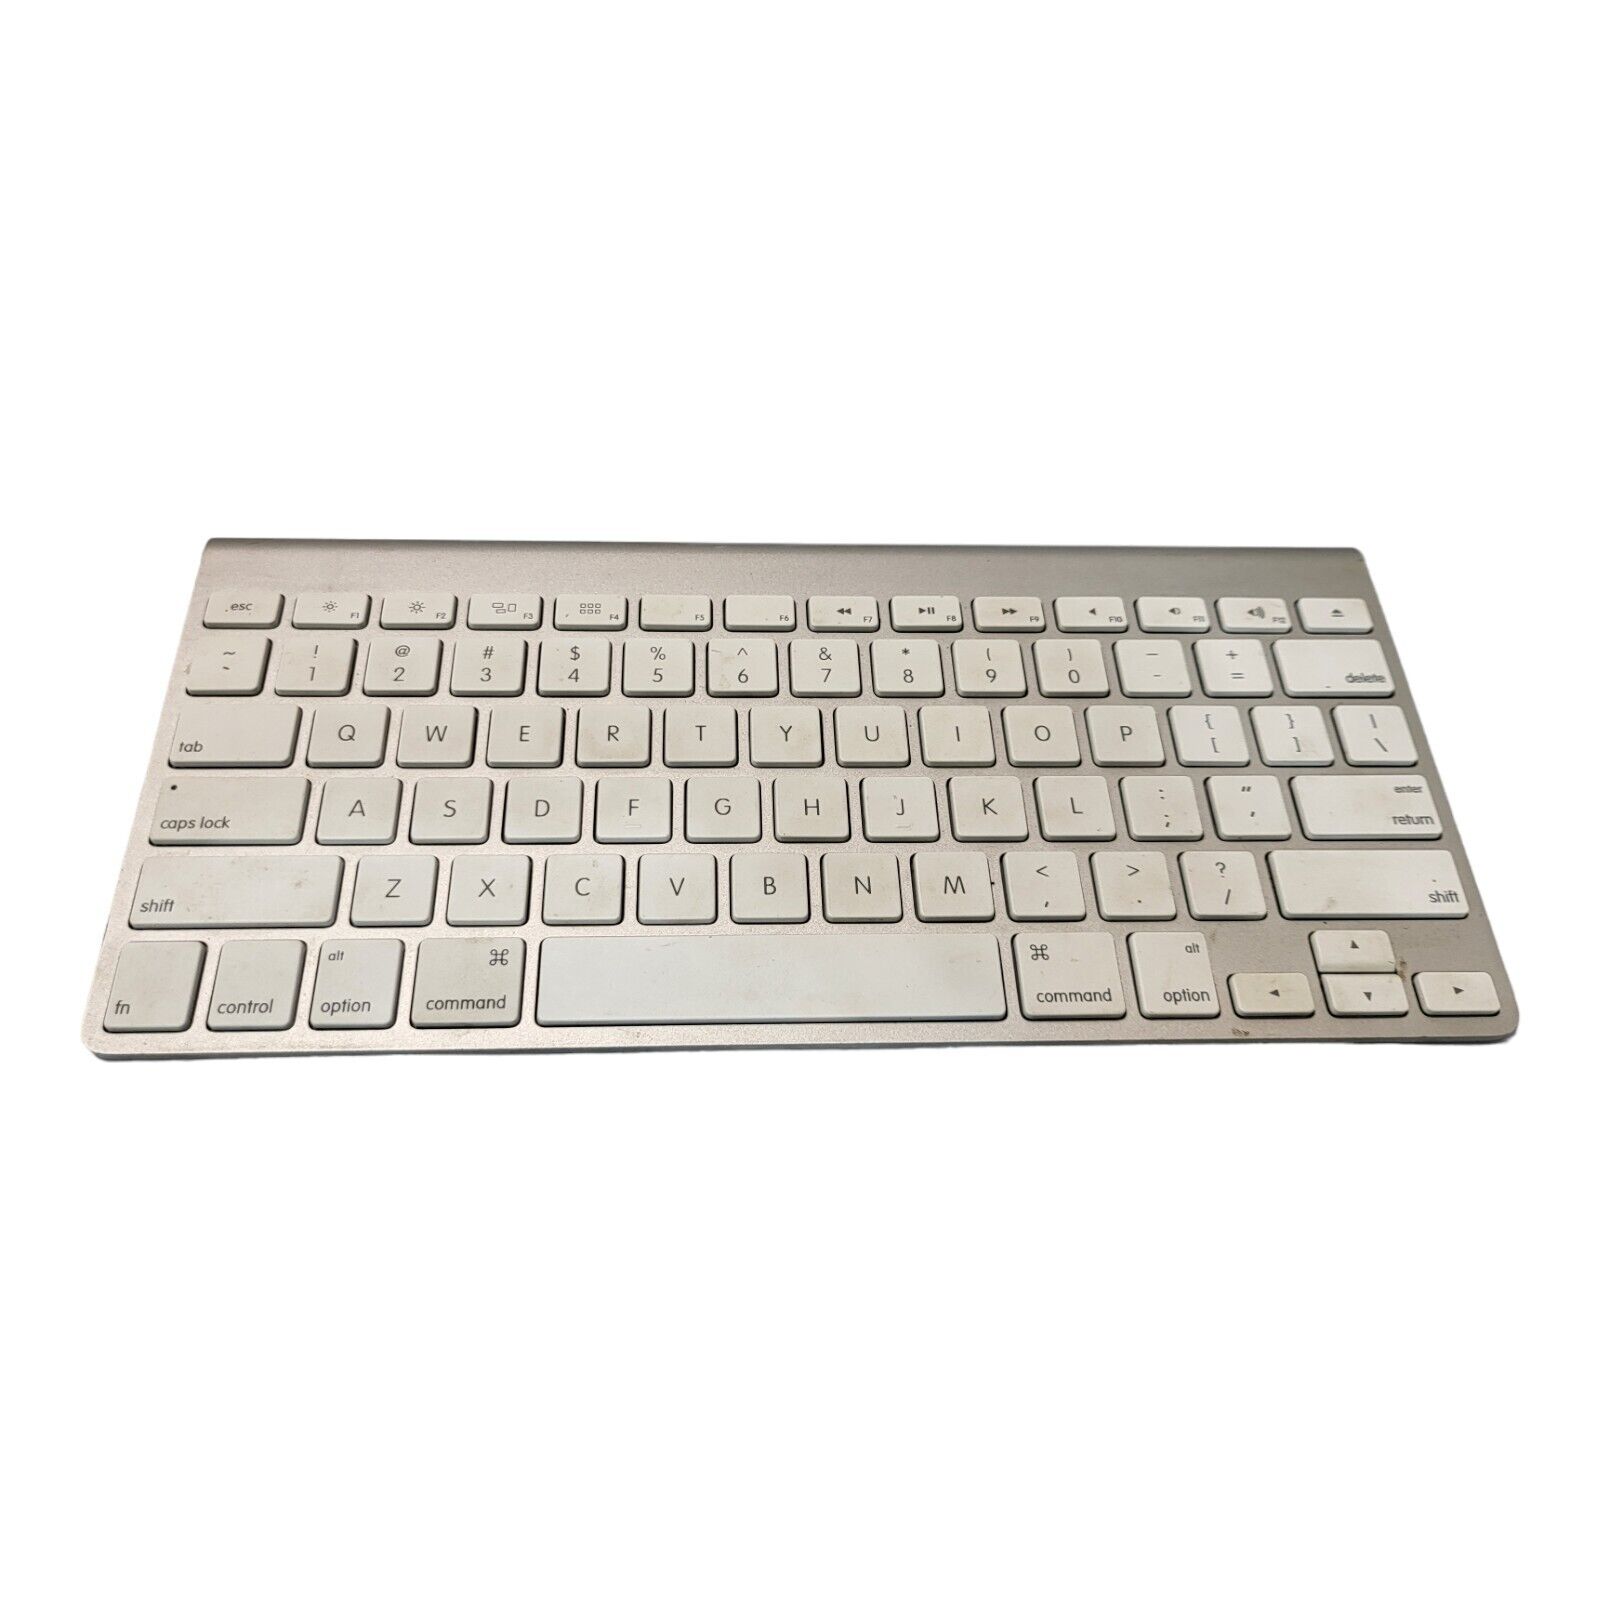 Original OEM Genuine Apple Magic A1314 Wireless Bluetooth Keyboard - TESTED